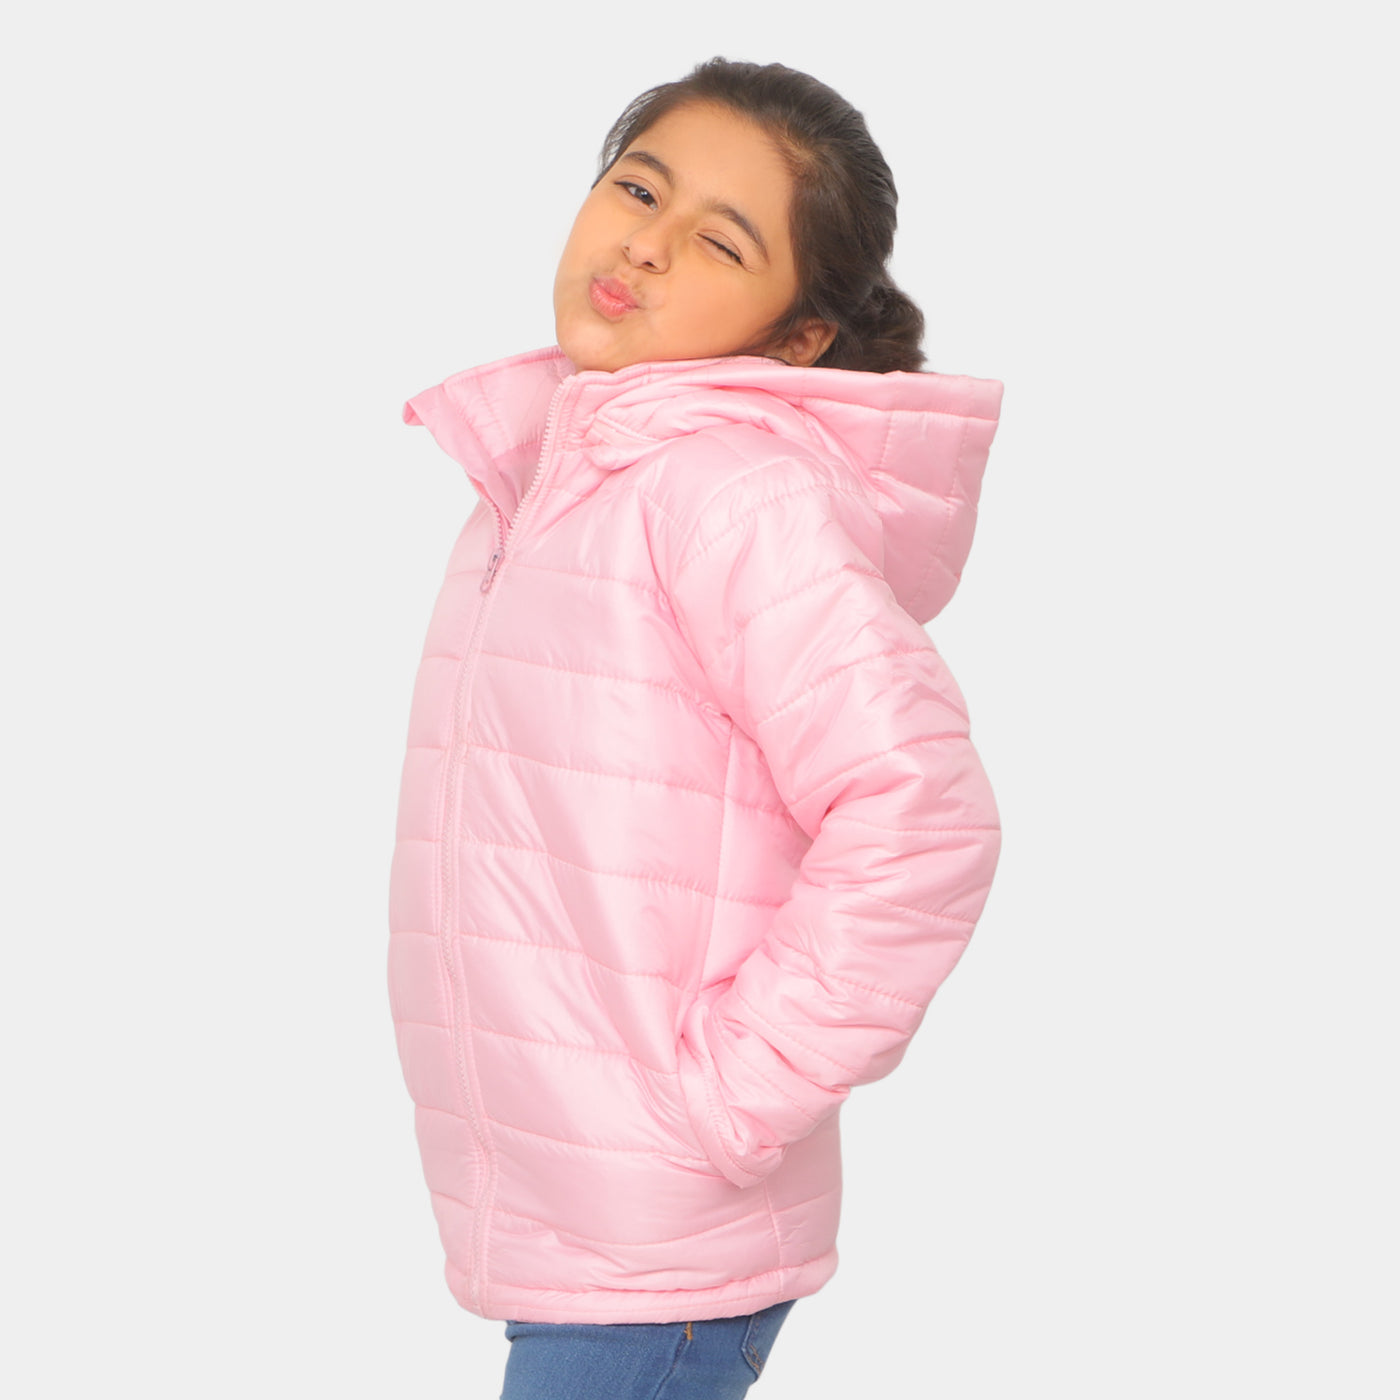 Girls Quilted Zipper Jacket Basic - Pink